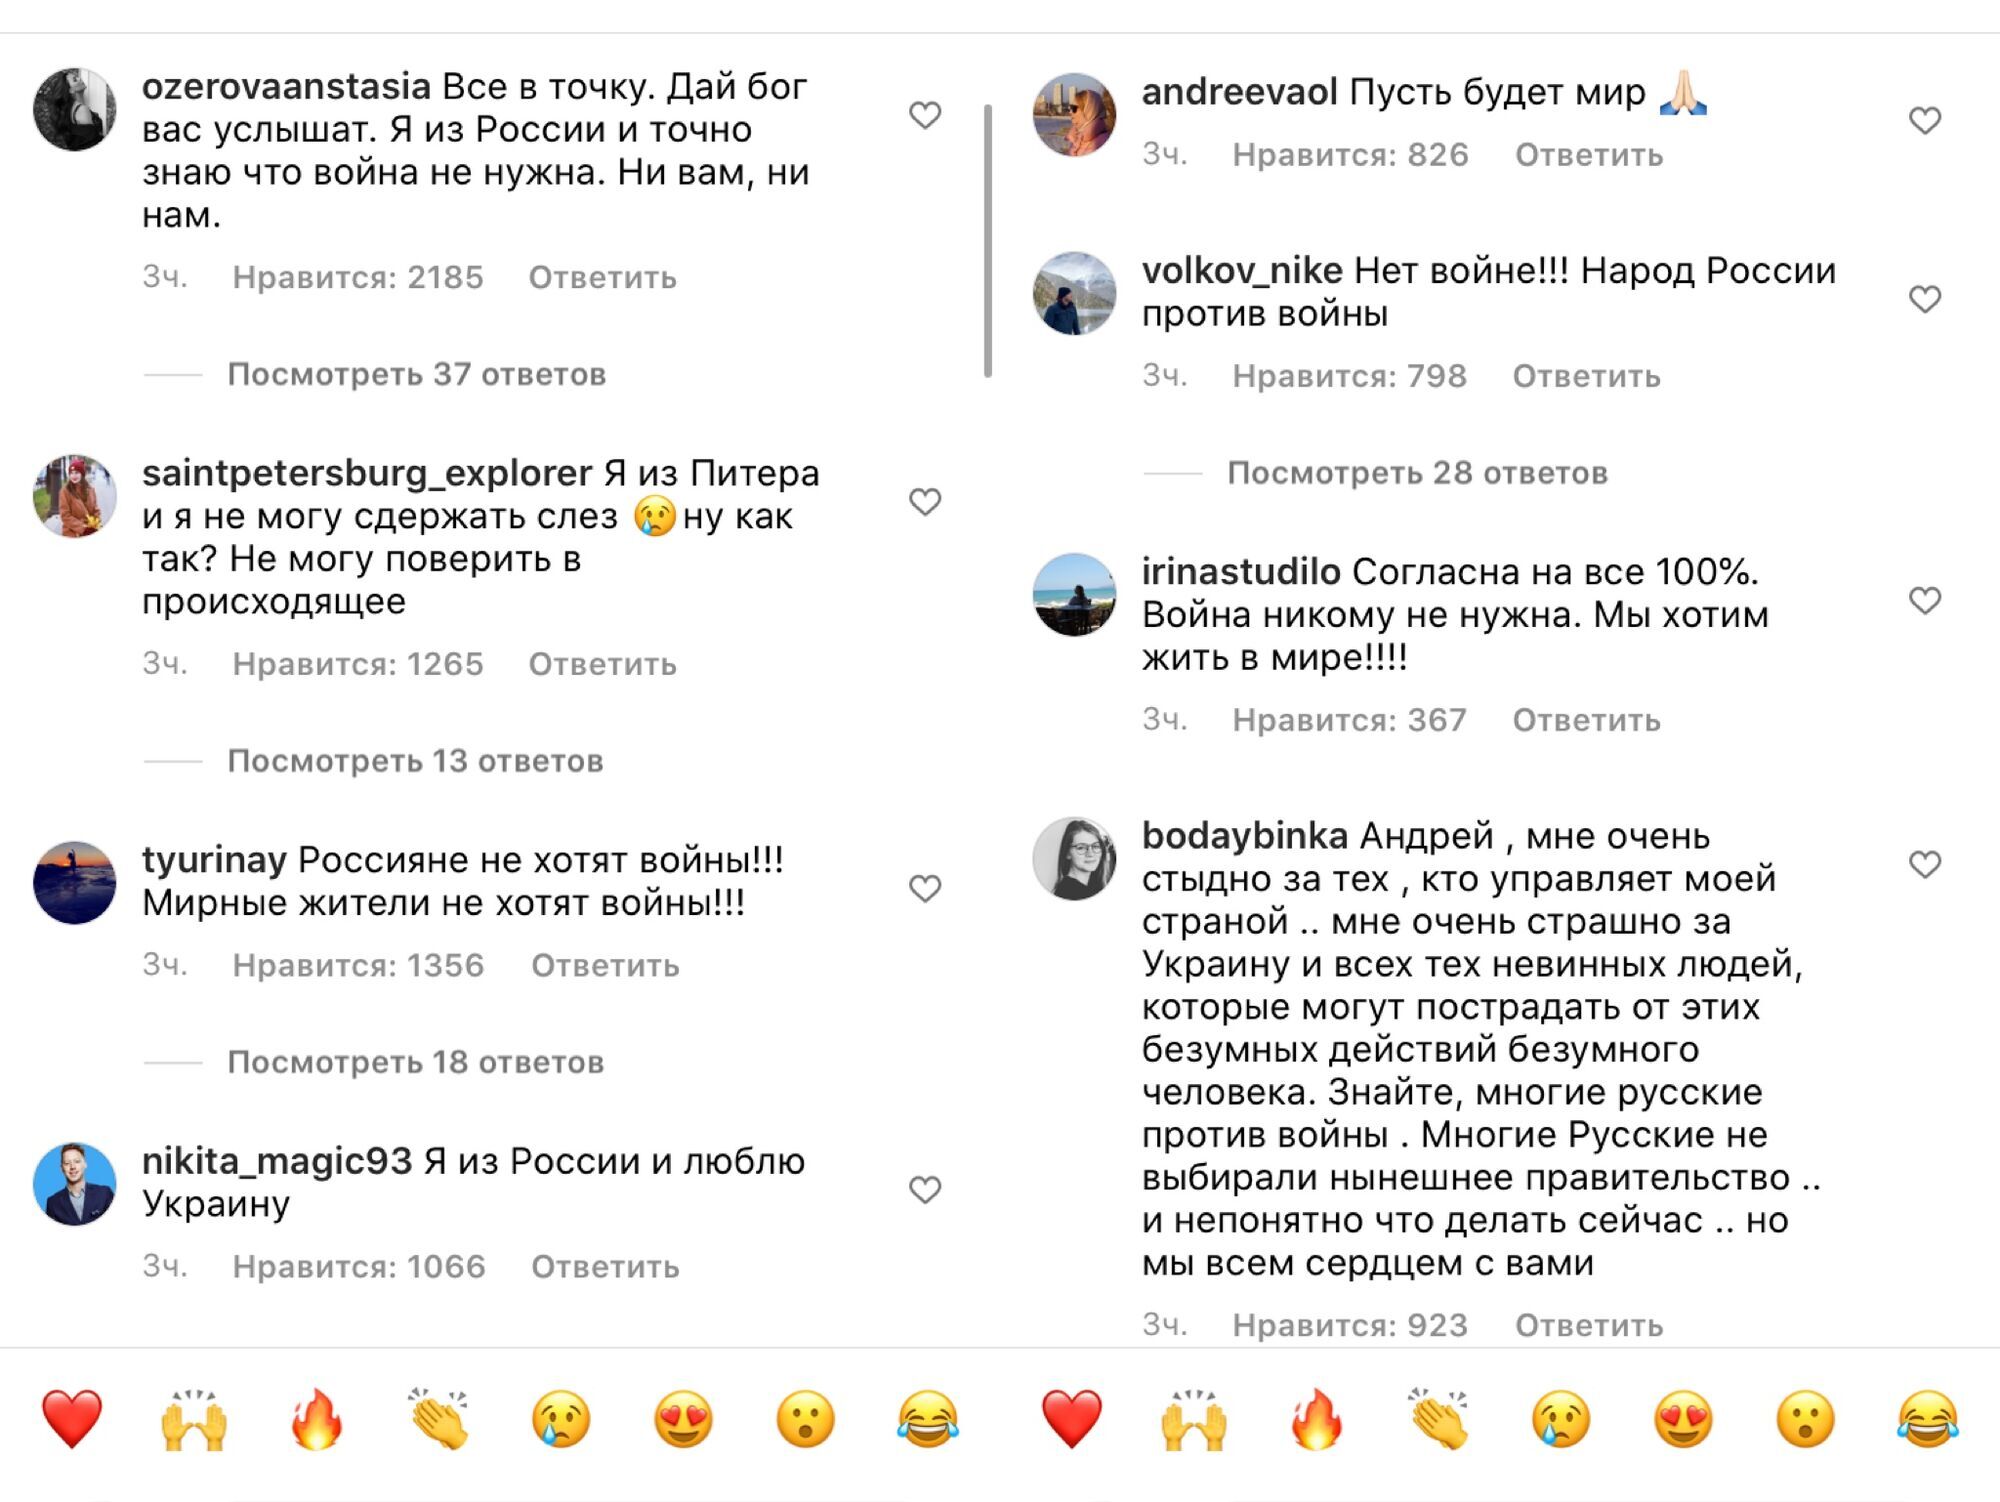 Комментарии под публикацией Беднякова